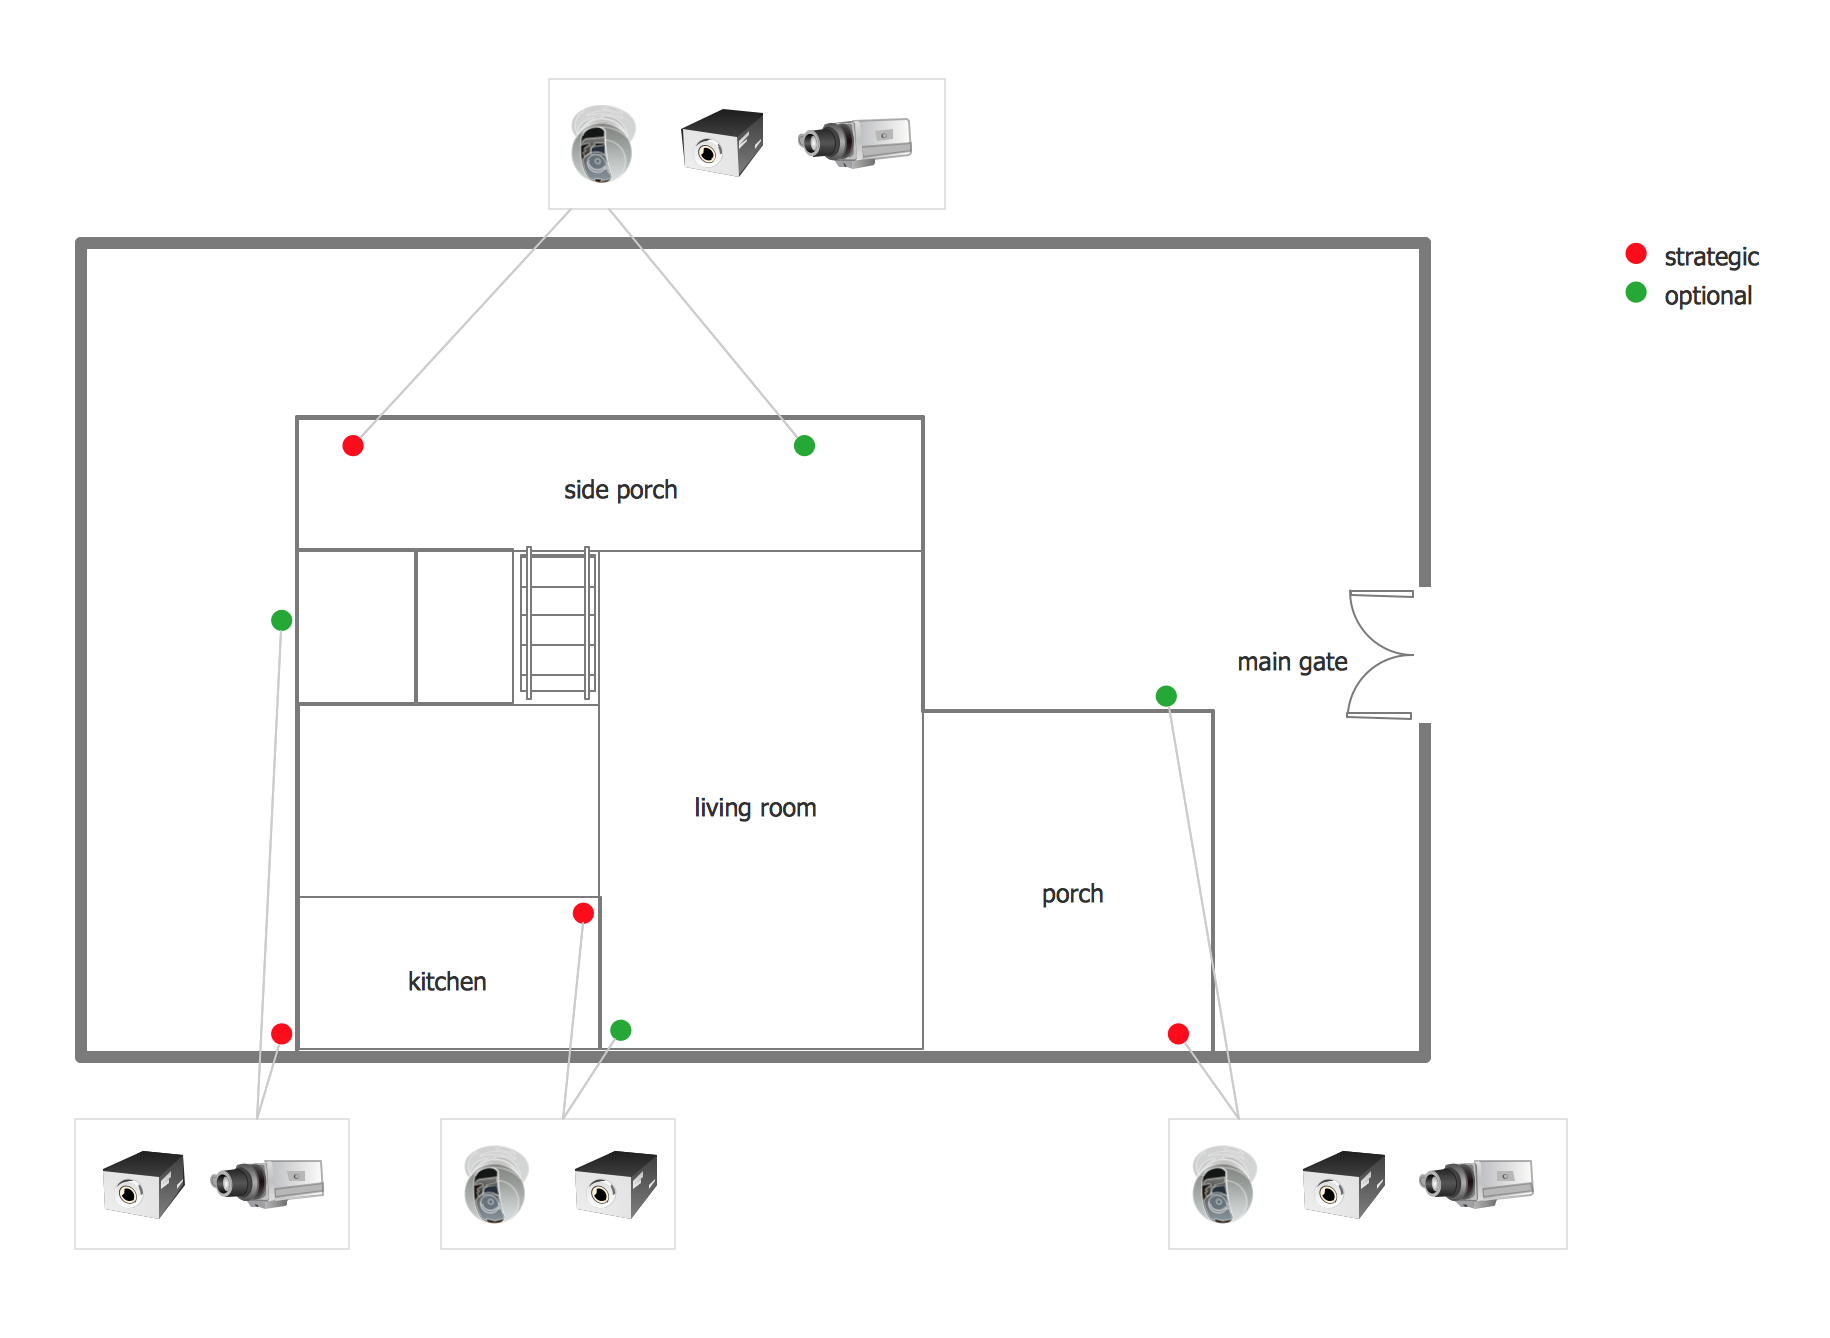 CCTV Network Diagram - Home CCTV system